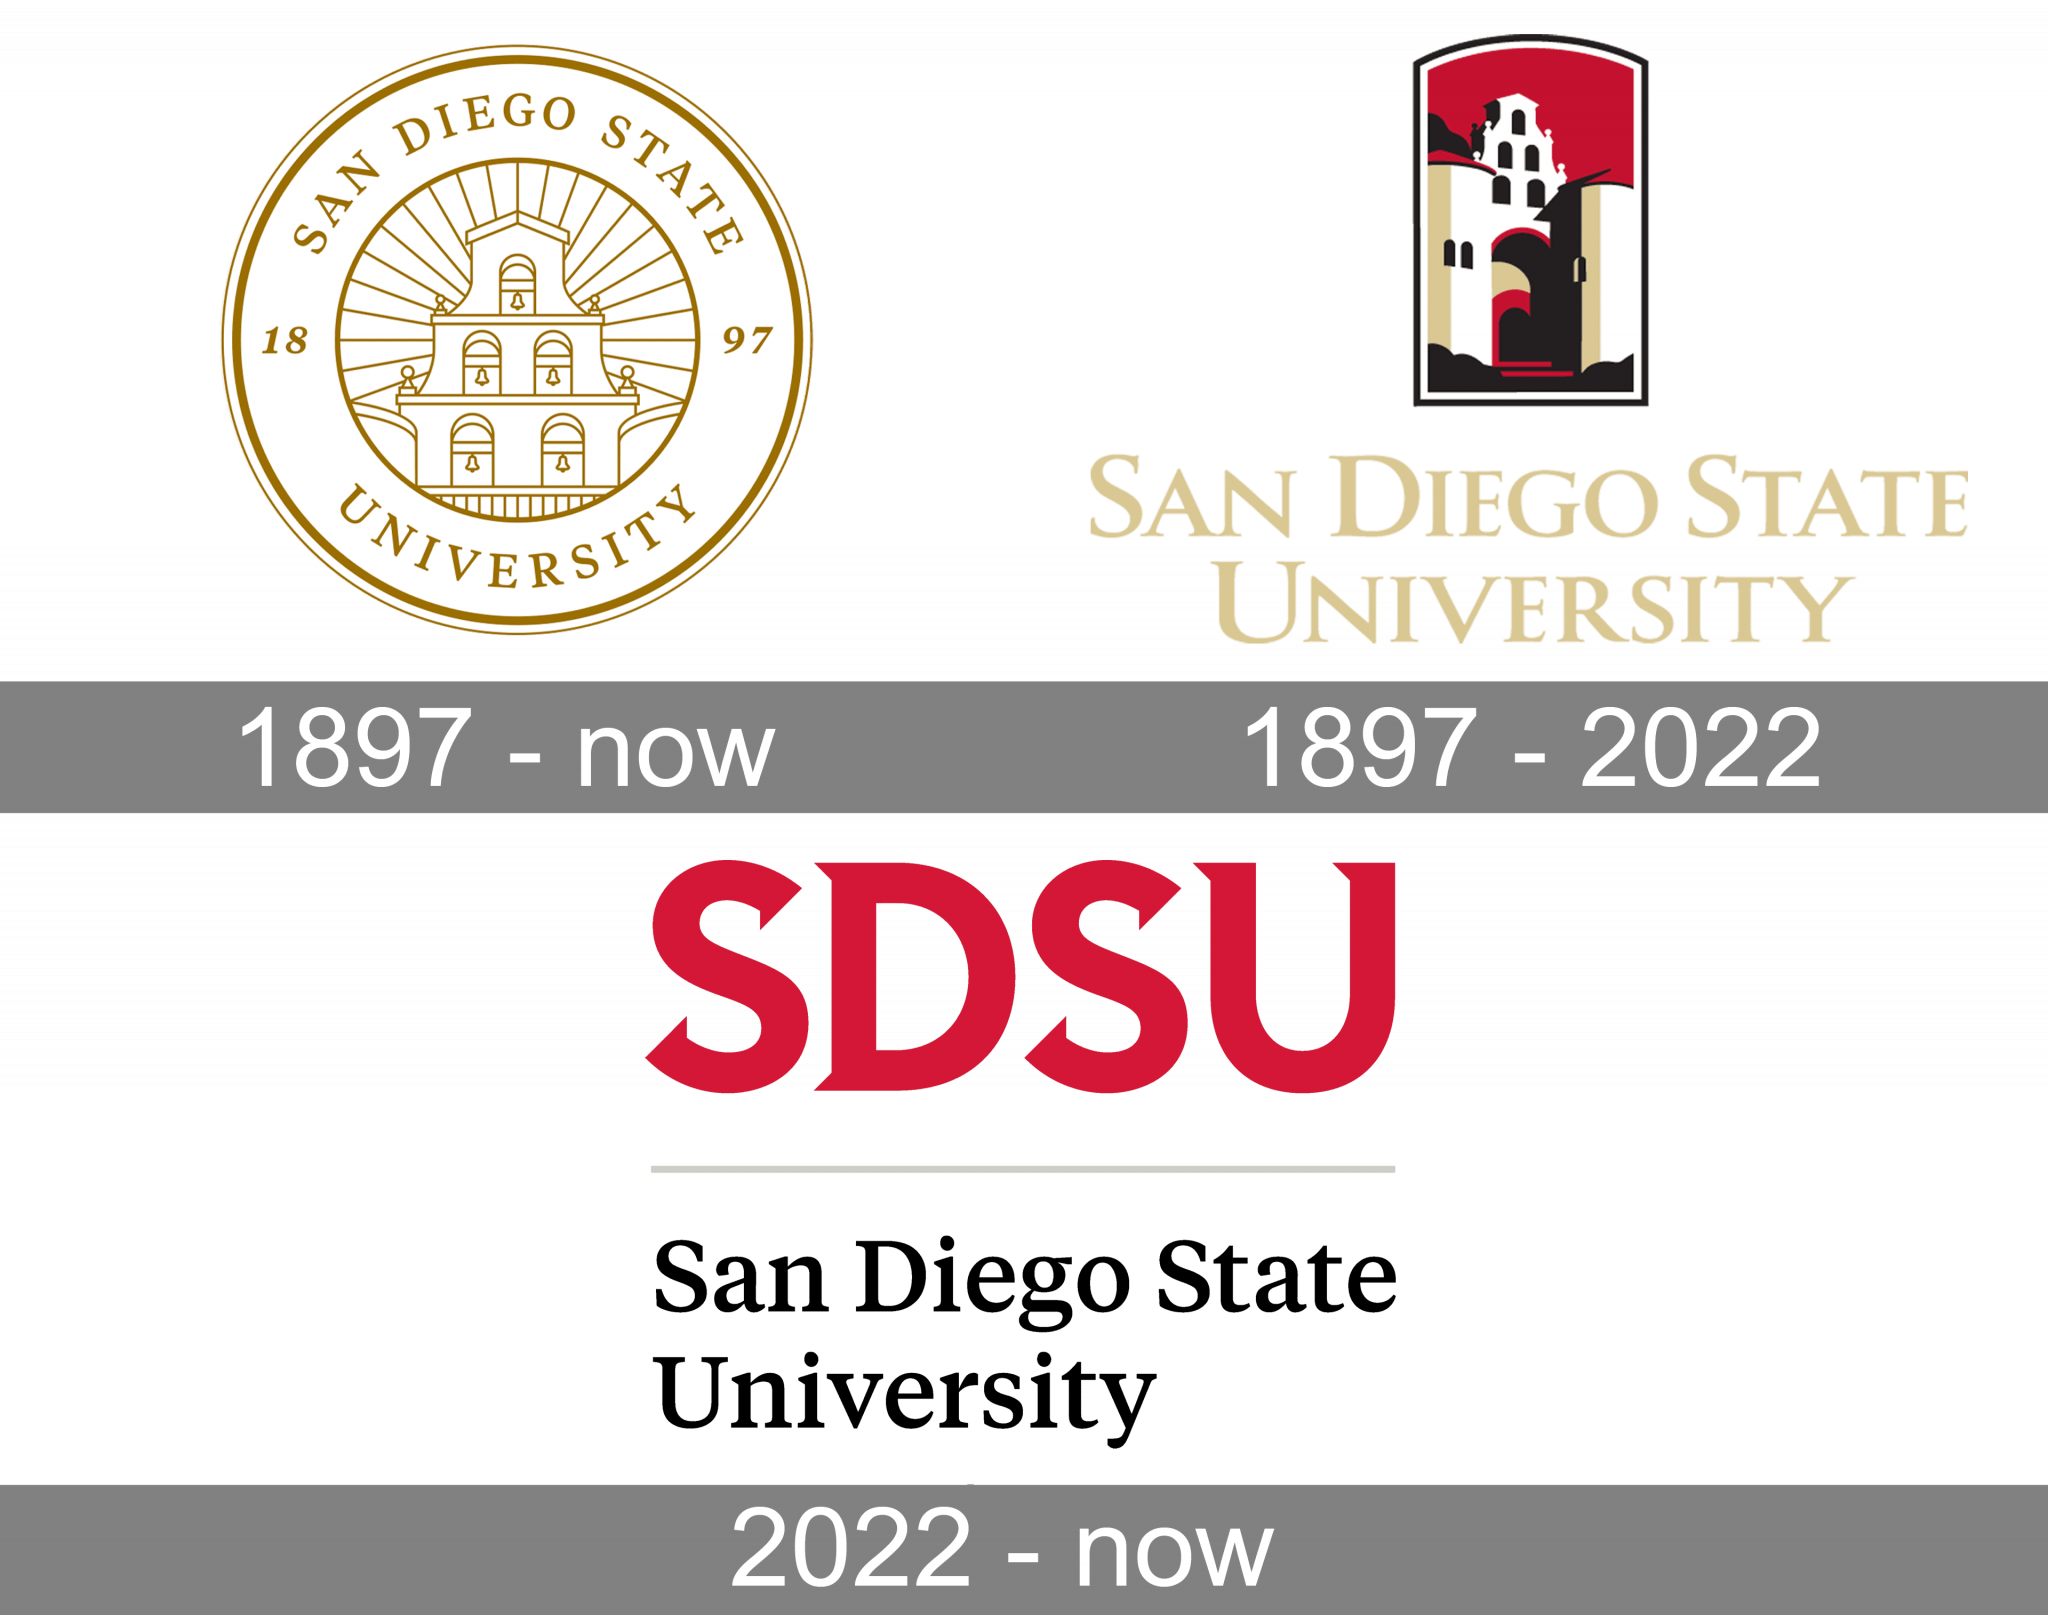 San Diego State University Logo ( SDSU Logo) and symbol, meaning